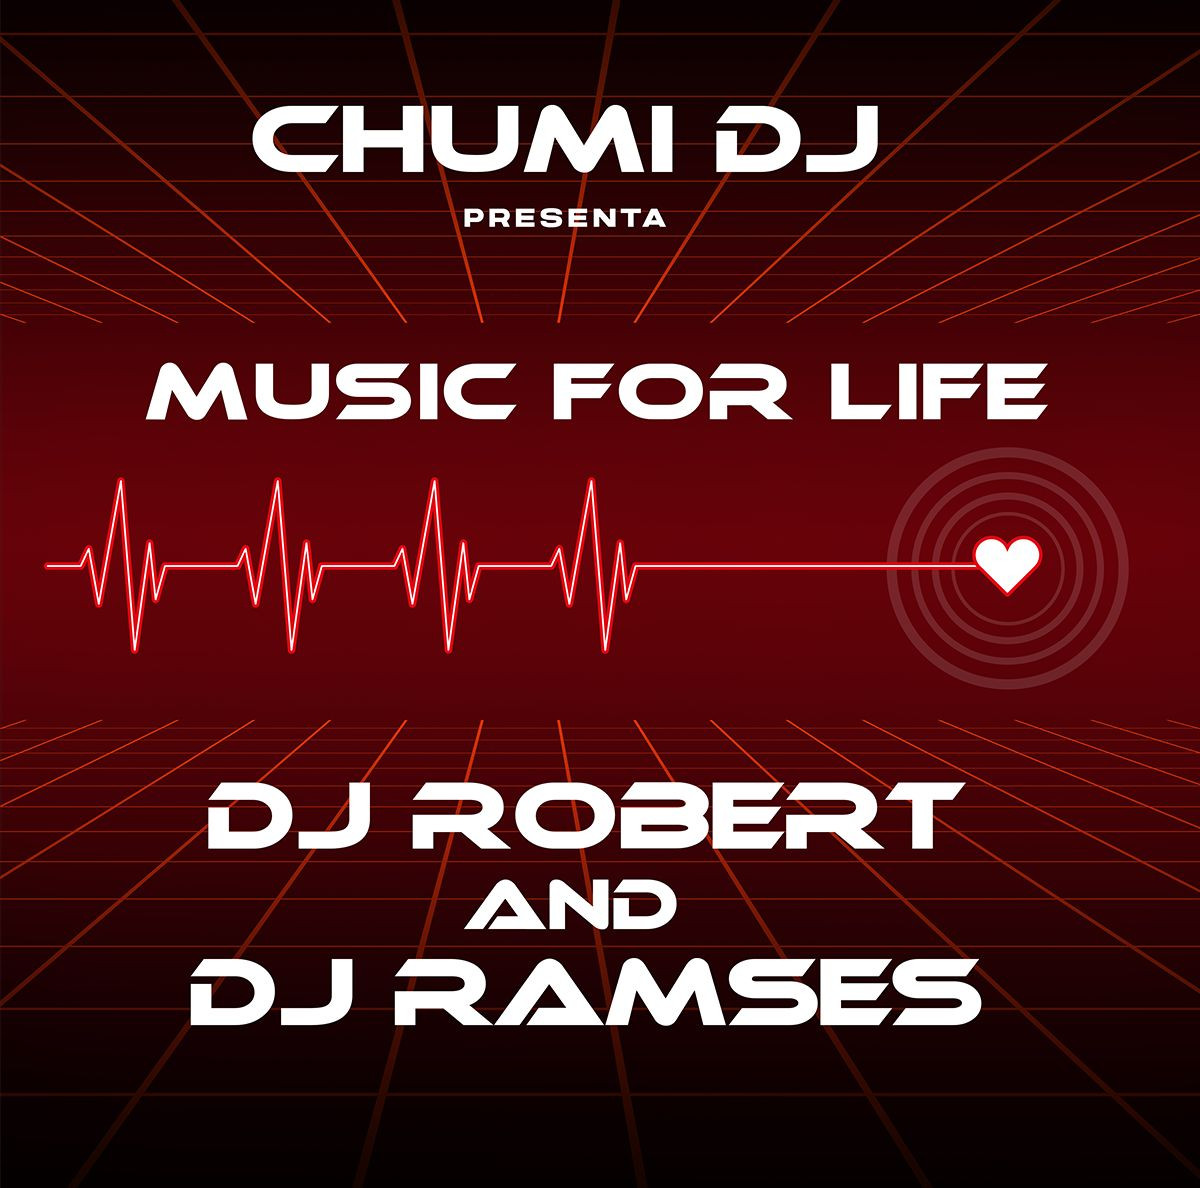 (30538) Chumi DJ Presents Dj Robert and Dj Ramses – Music for Life